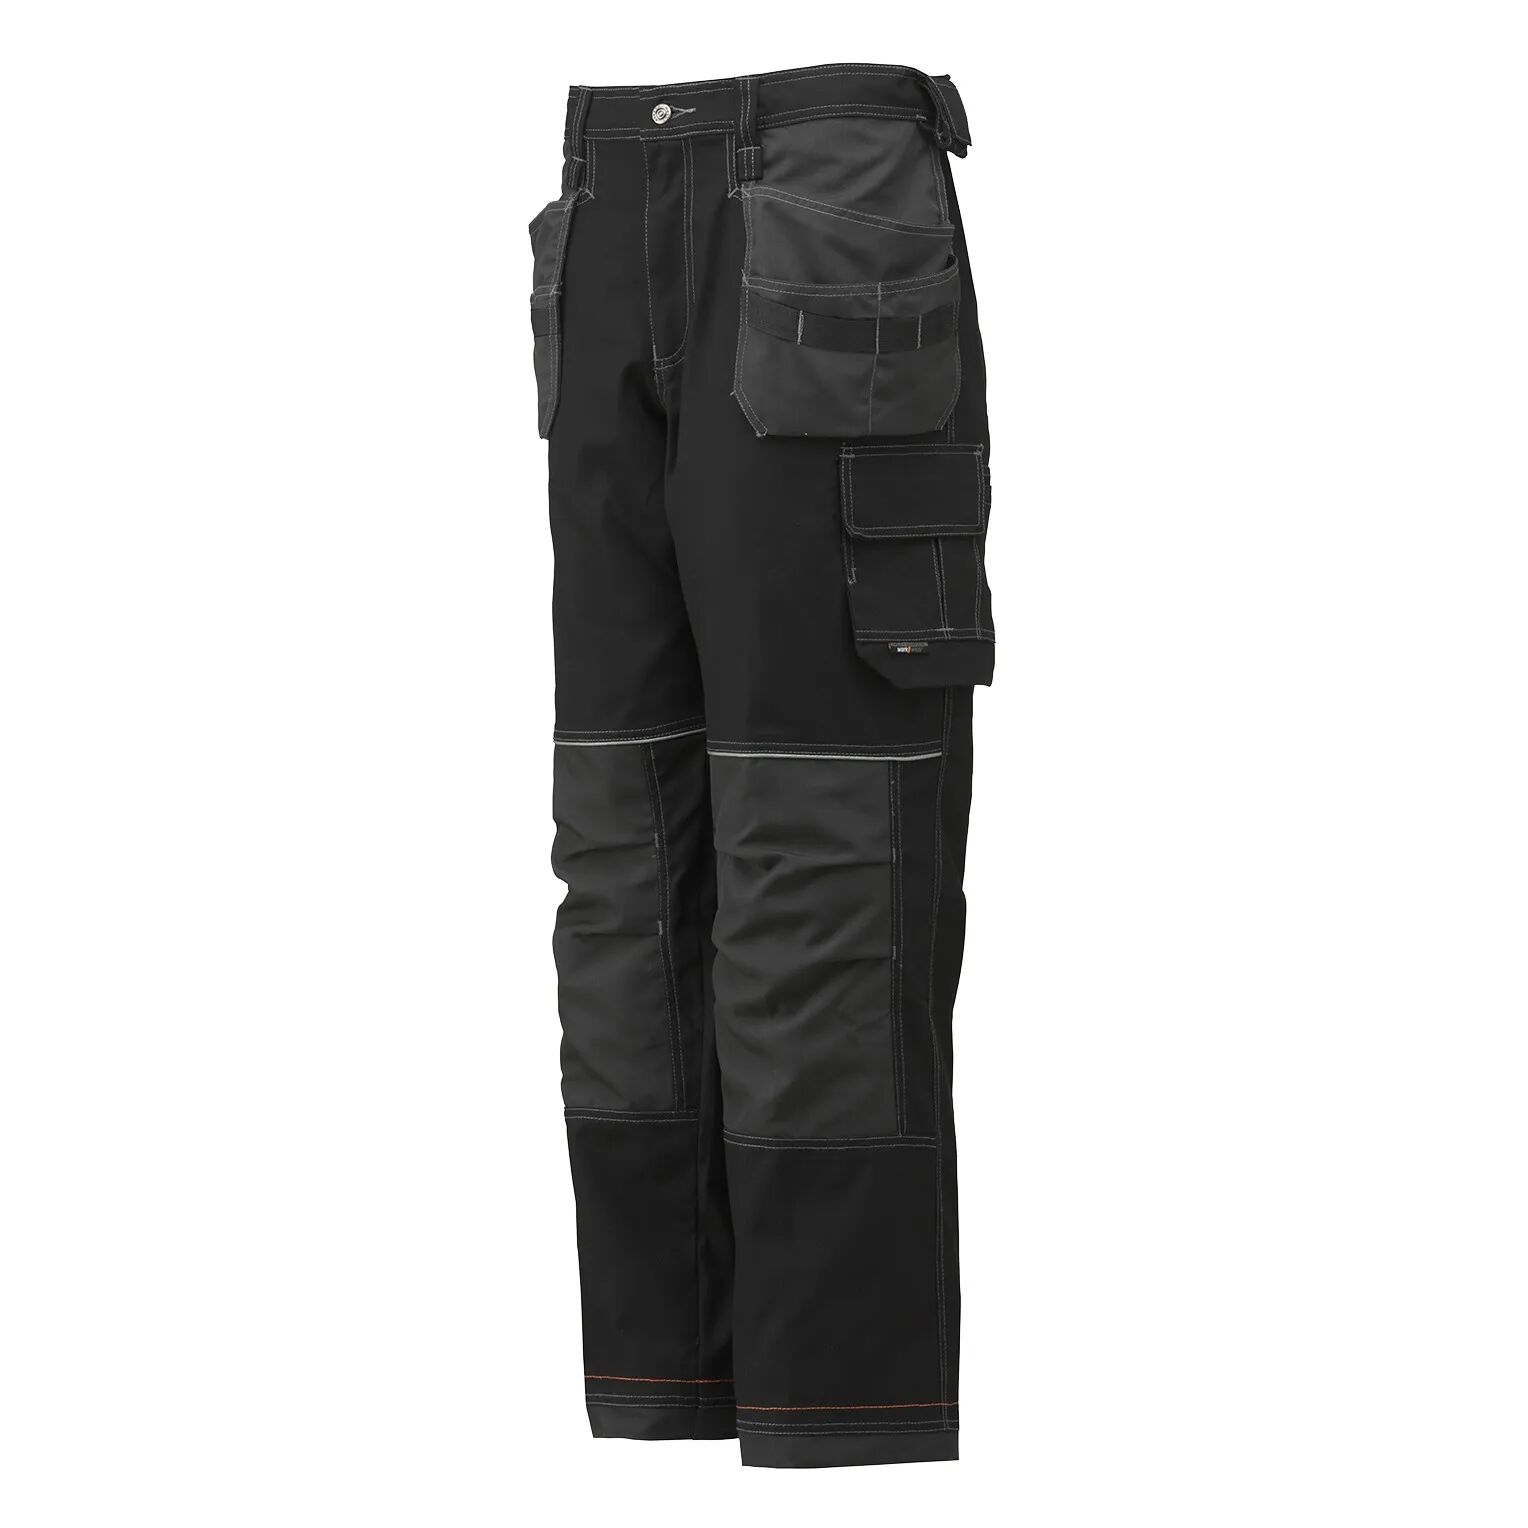 HH Workwear Helly Hansen WorkwearChelsea Durable Reflective Construction Pants Black 38/34